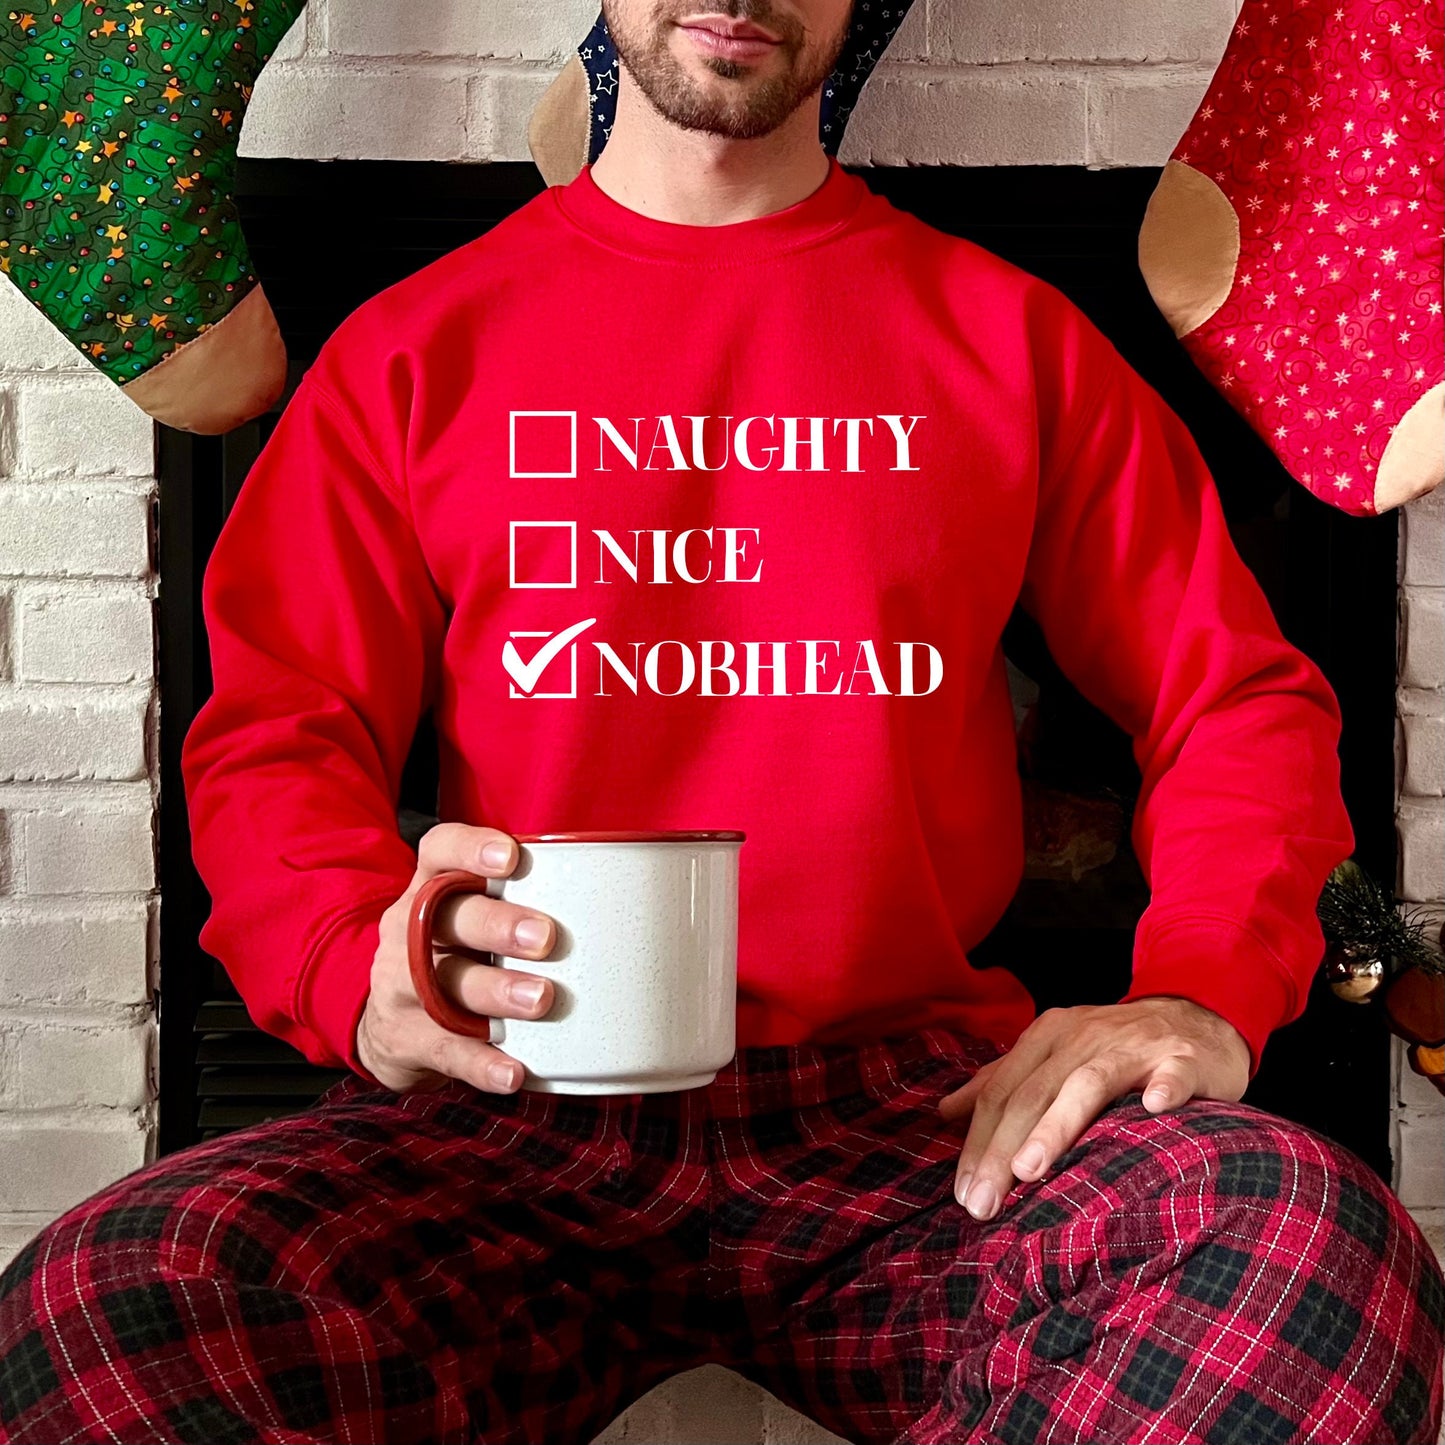 Naughty Nice Nobhead JH030 Rude Funny Christmas Check List Sweatshirt Jumper Sweater